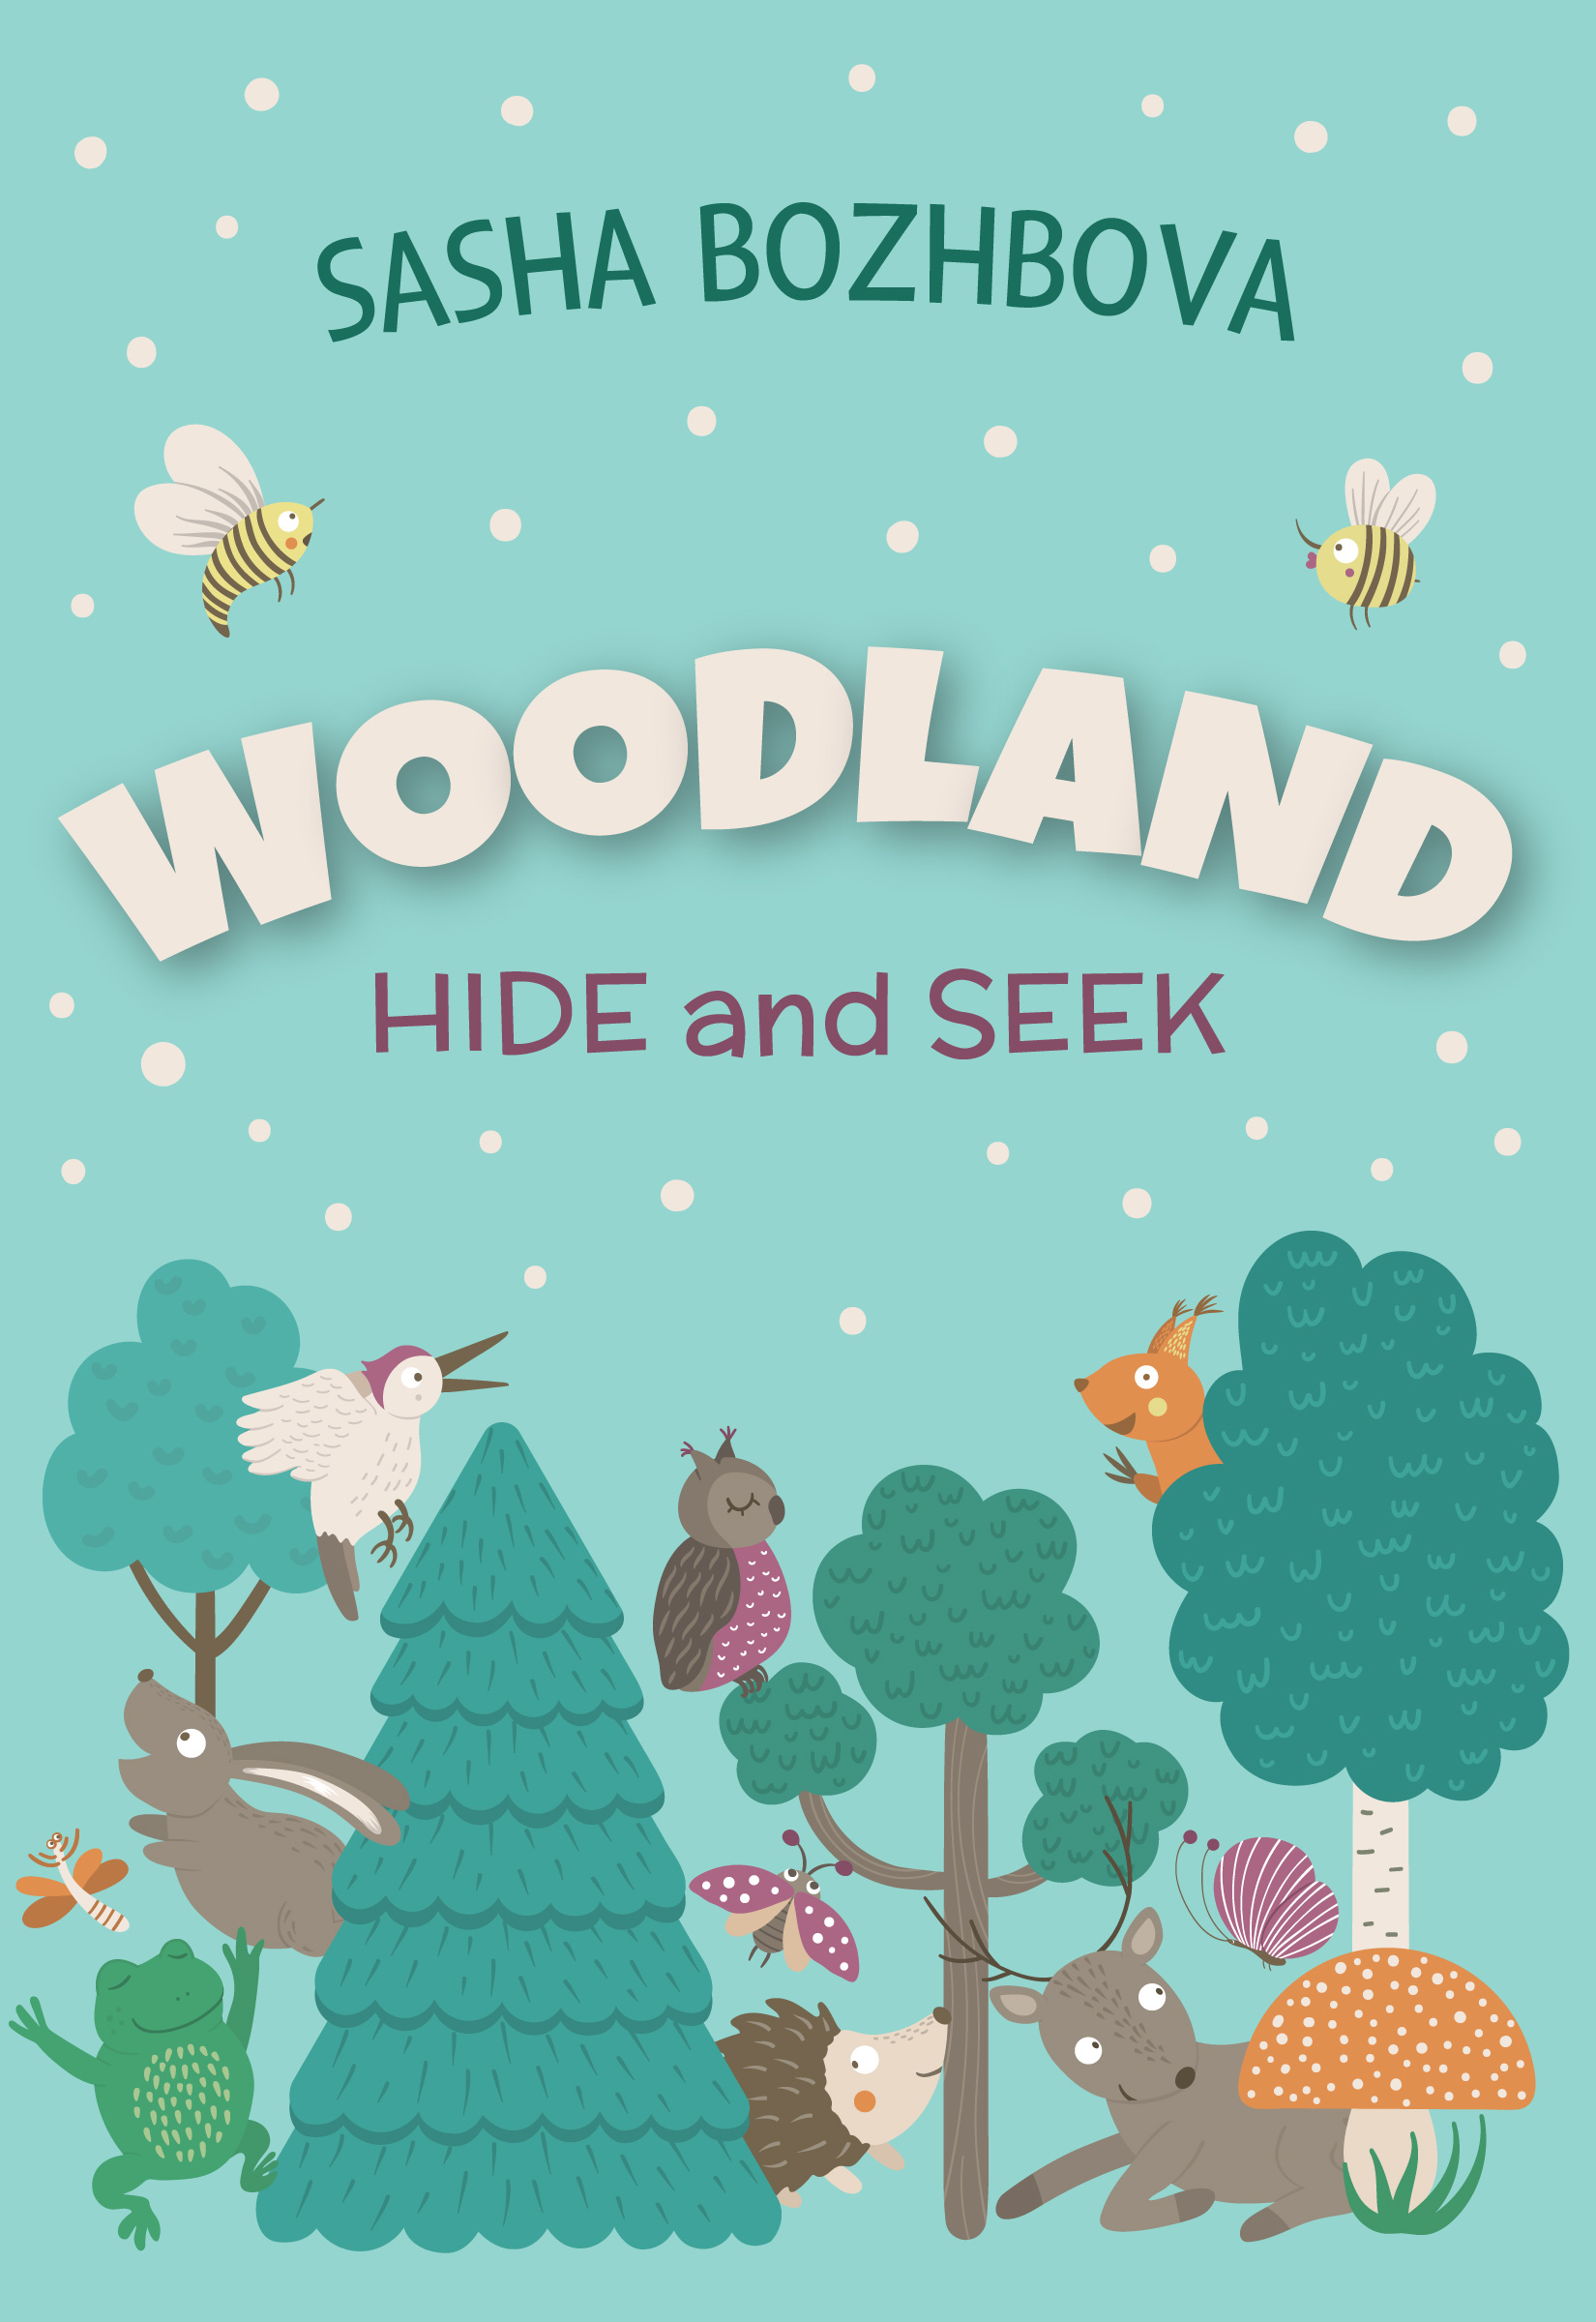 FREE: Woodland Hide and Seek by Sasha Bozhbova